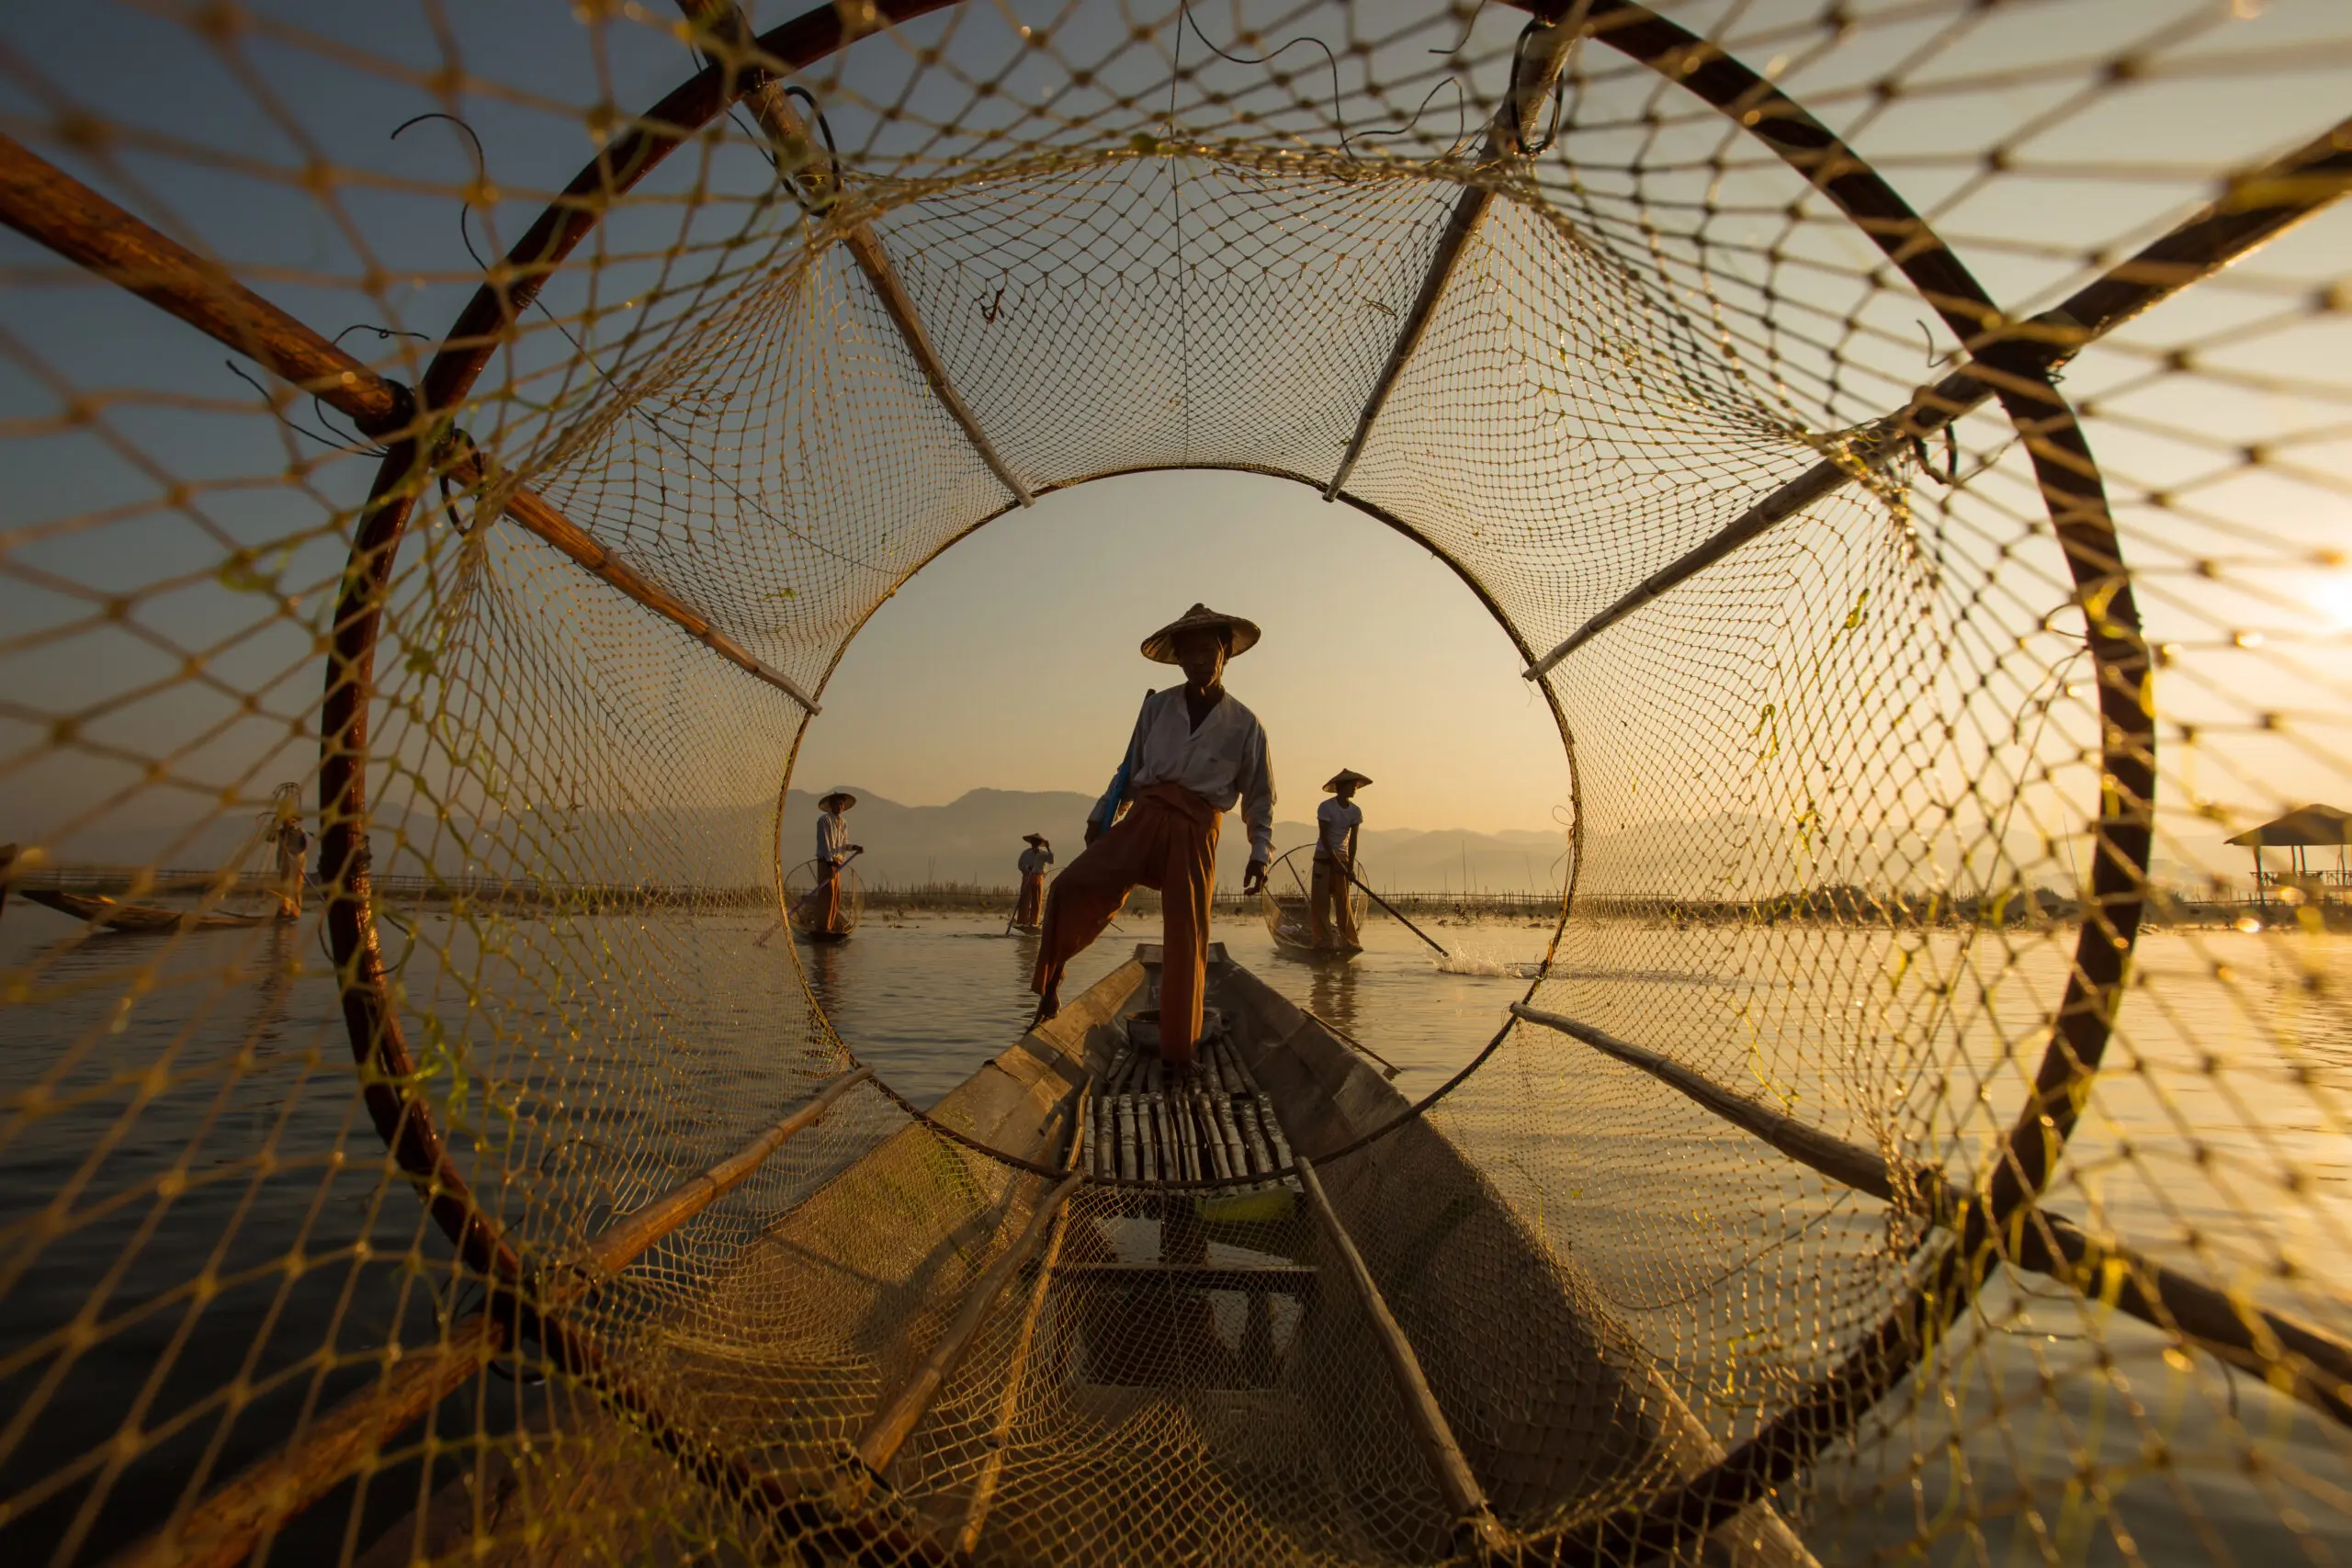 Wandbild (5703) Inle Fisherman by Guanarto Song, 1x.com präsentiert: Menschen,Wasser,Natur,Landschaften,Sommer,Asien,Gewässer,Männer,Seen,Wasserspiegelungen